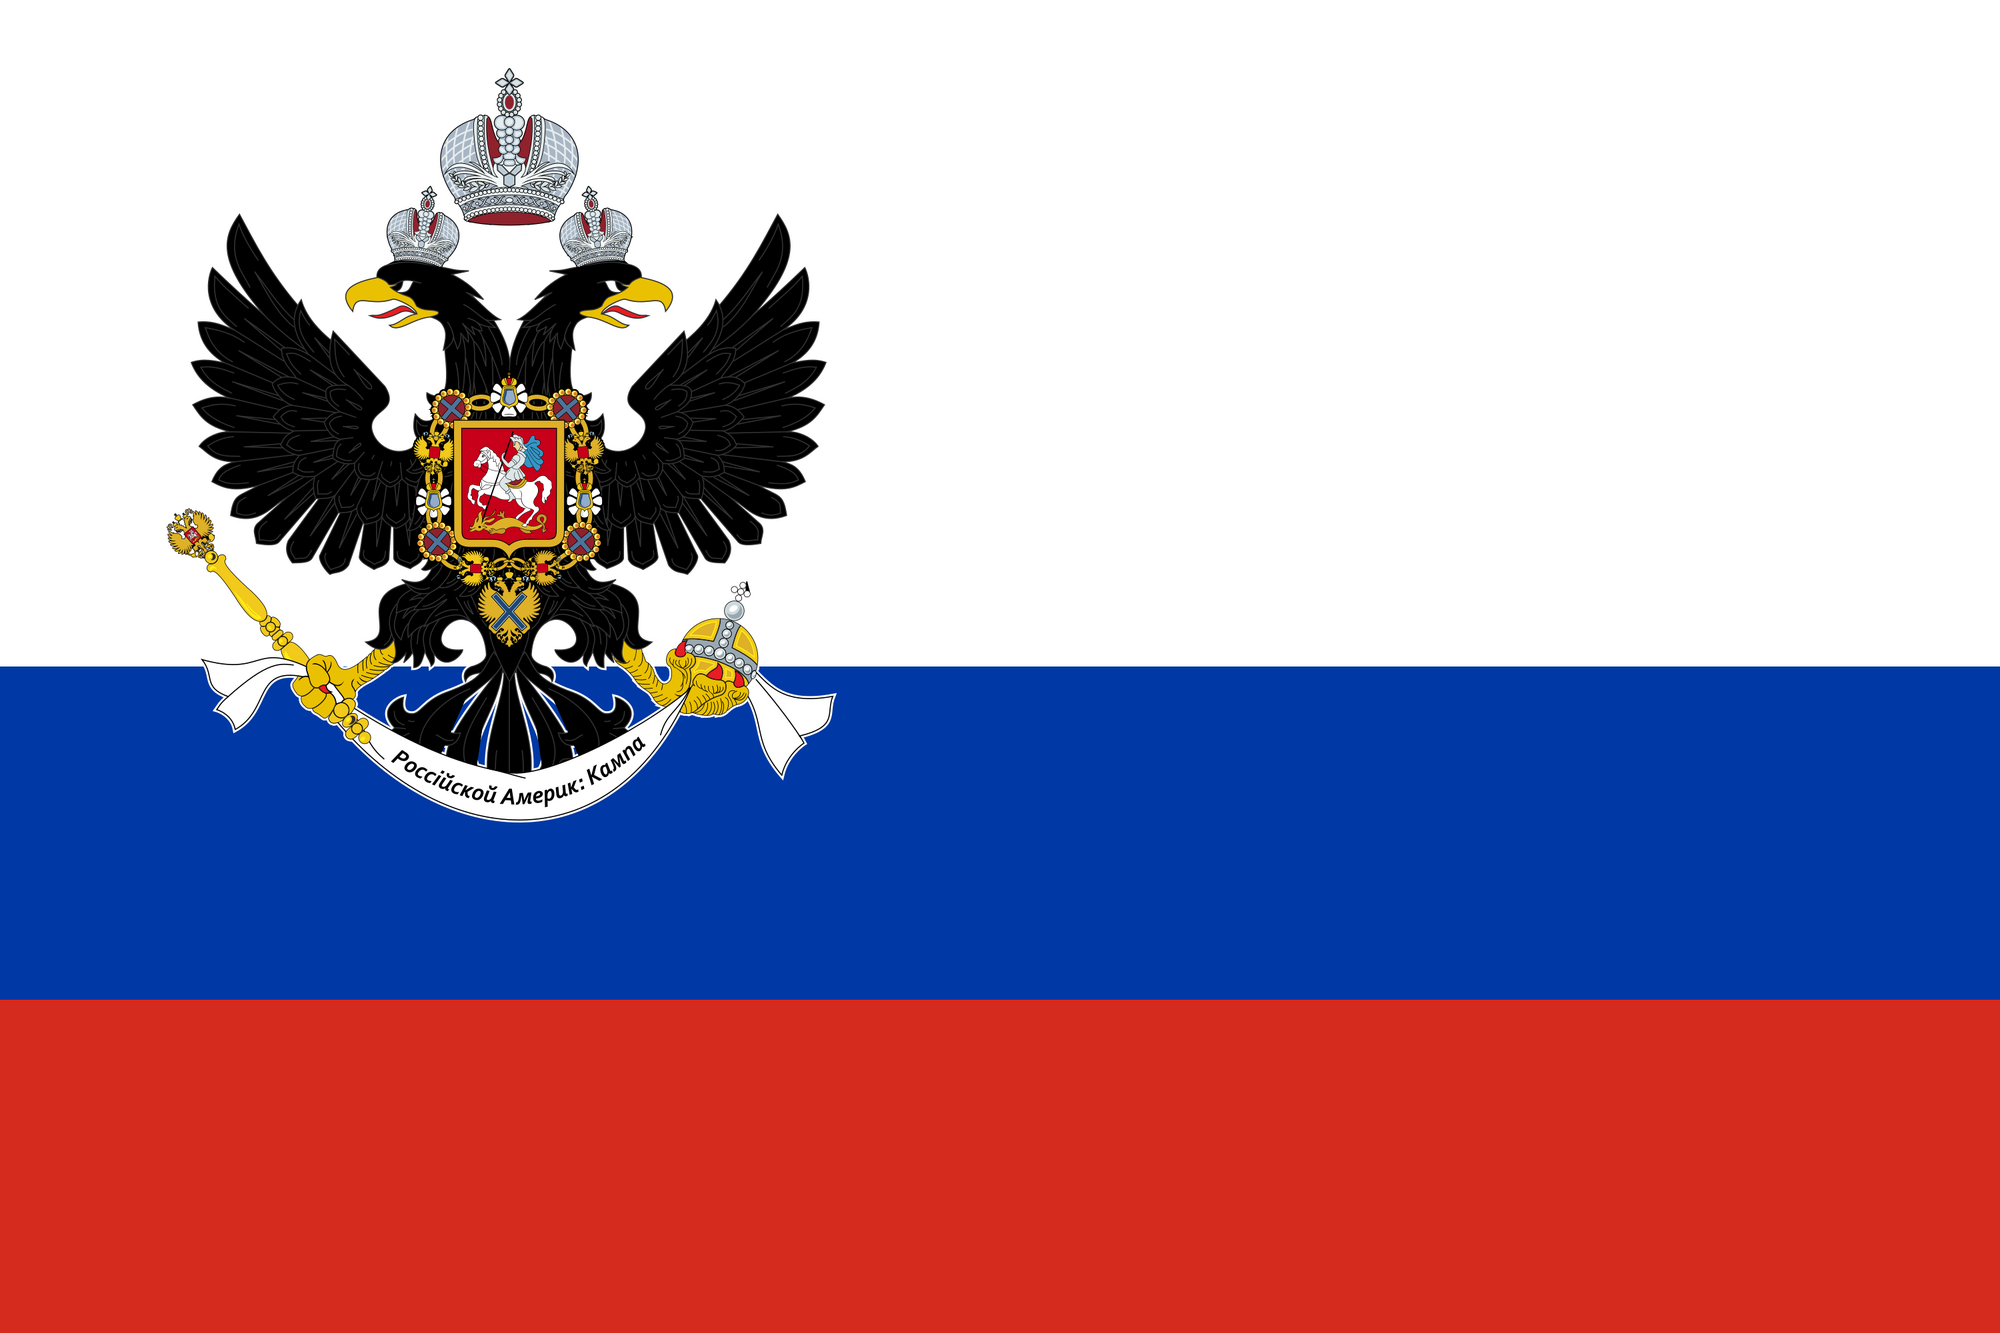 The Russian American Company Flag 27